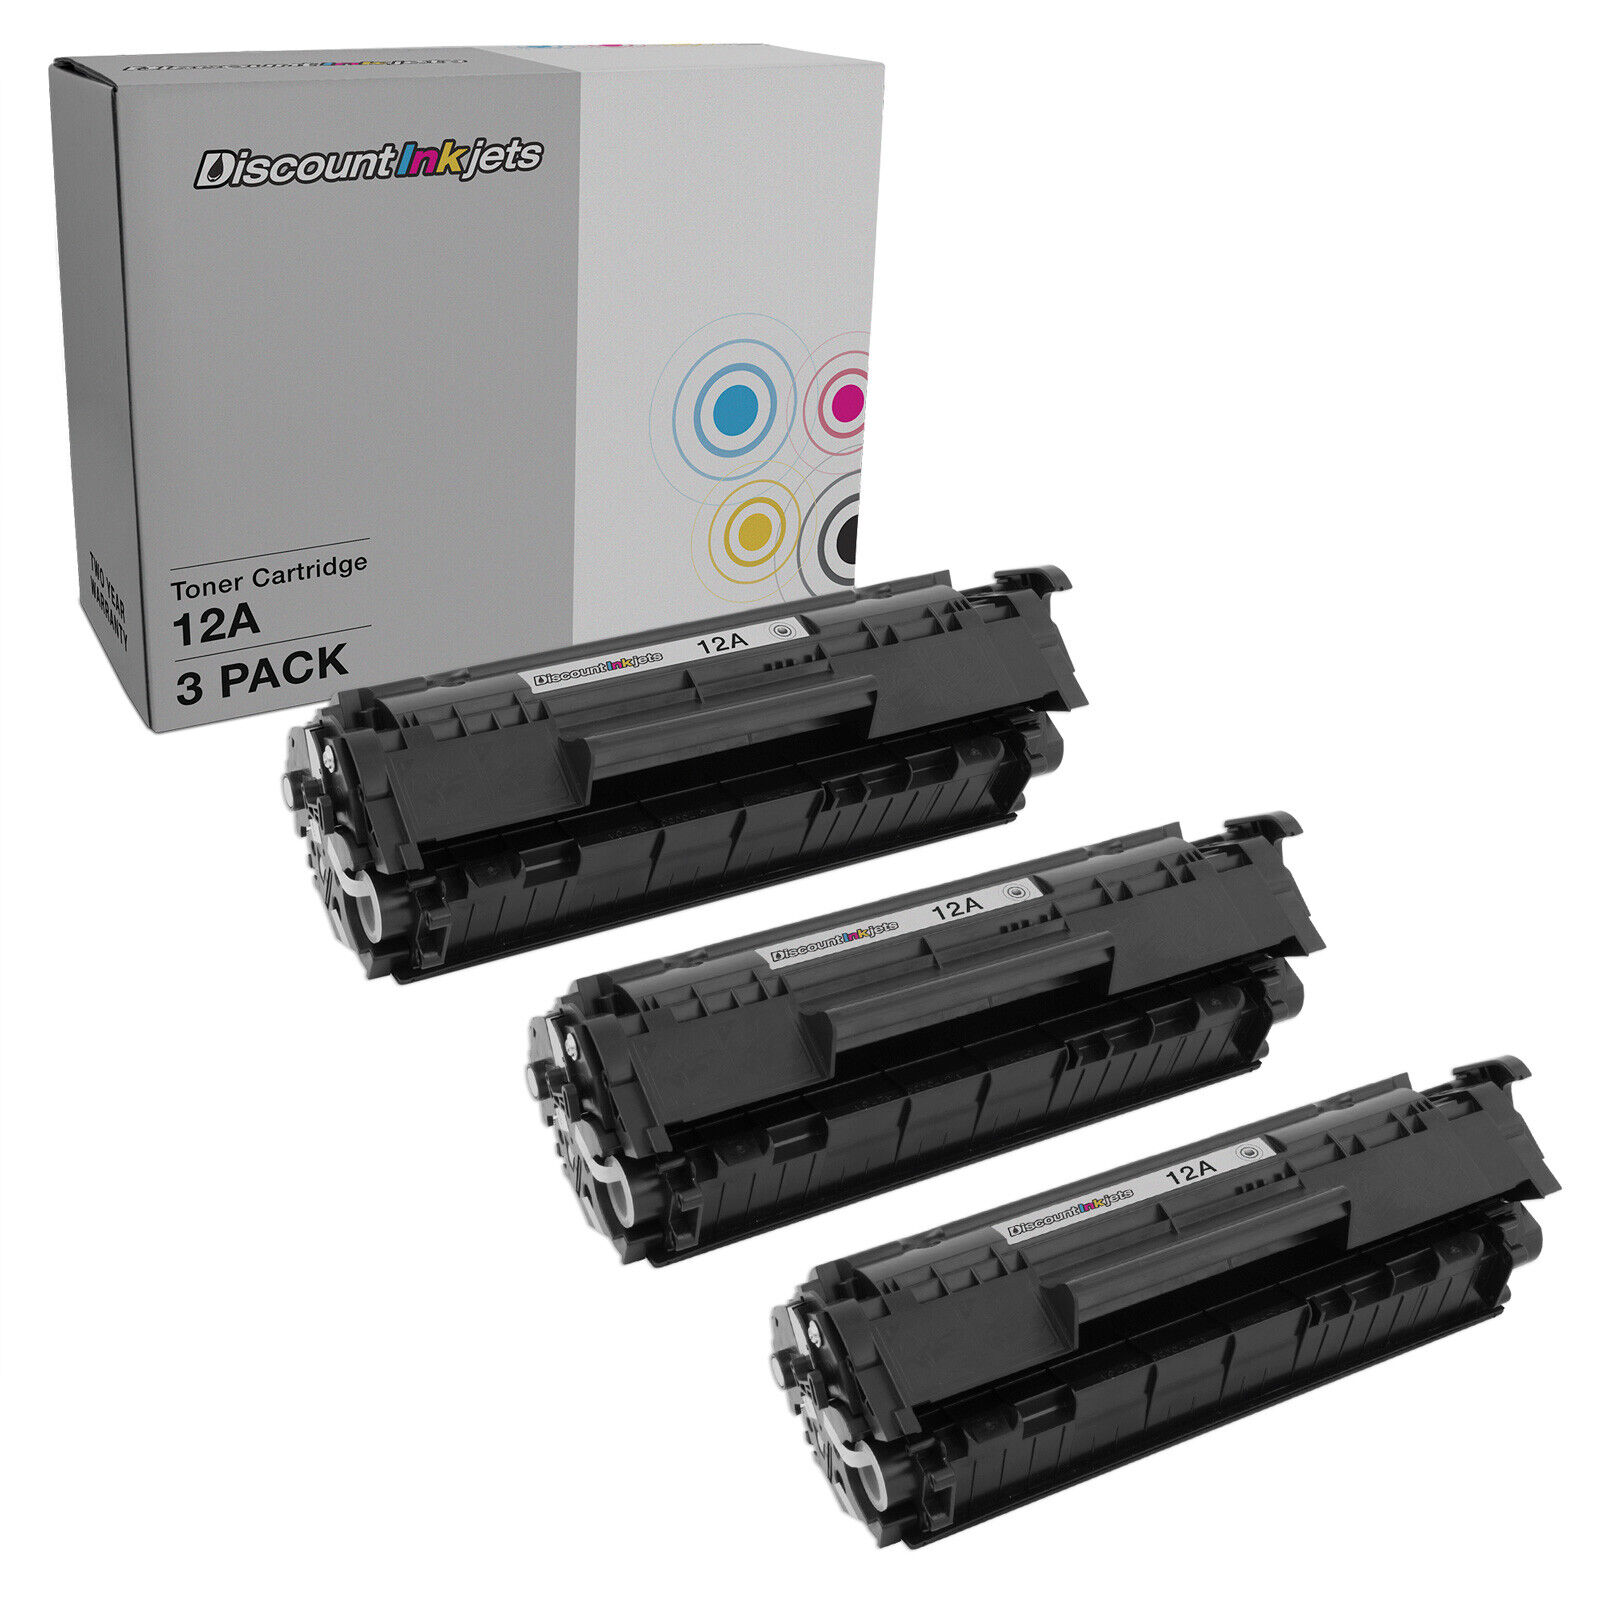 3PK Q2612A Toner Cartridge For HP 12A LaserJet 1012 1010 1018 1020 3030 3020